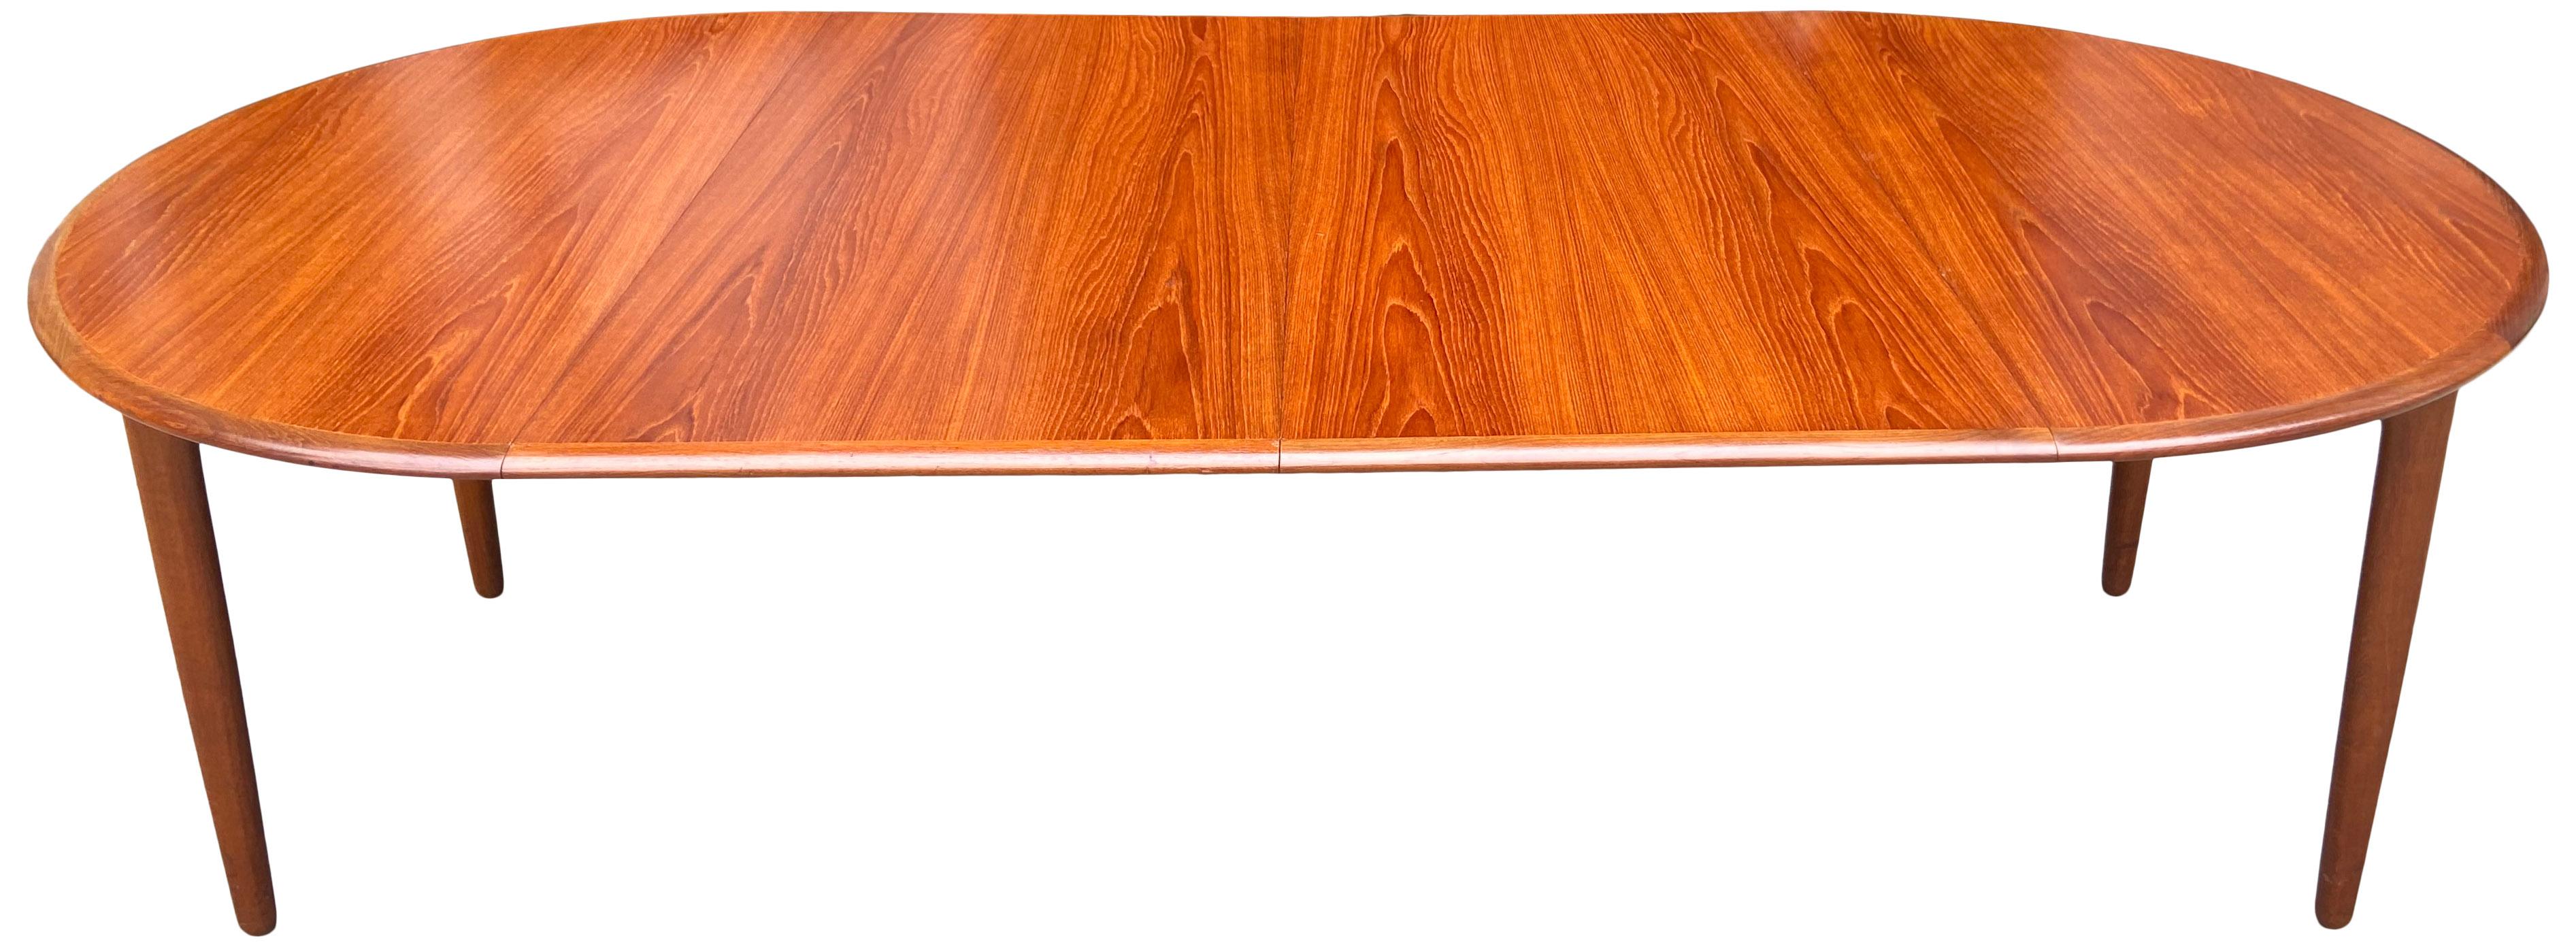 20th Century Midcentury Elliptical Oval Teak Expandable Dining Table '2' Leaves